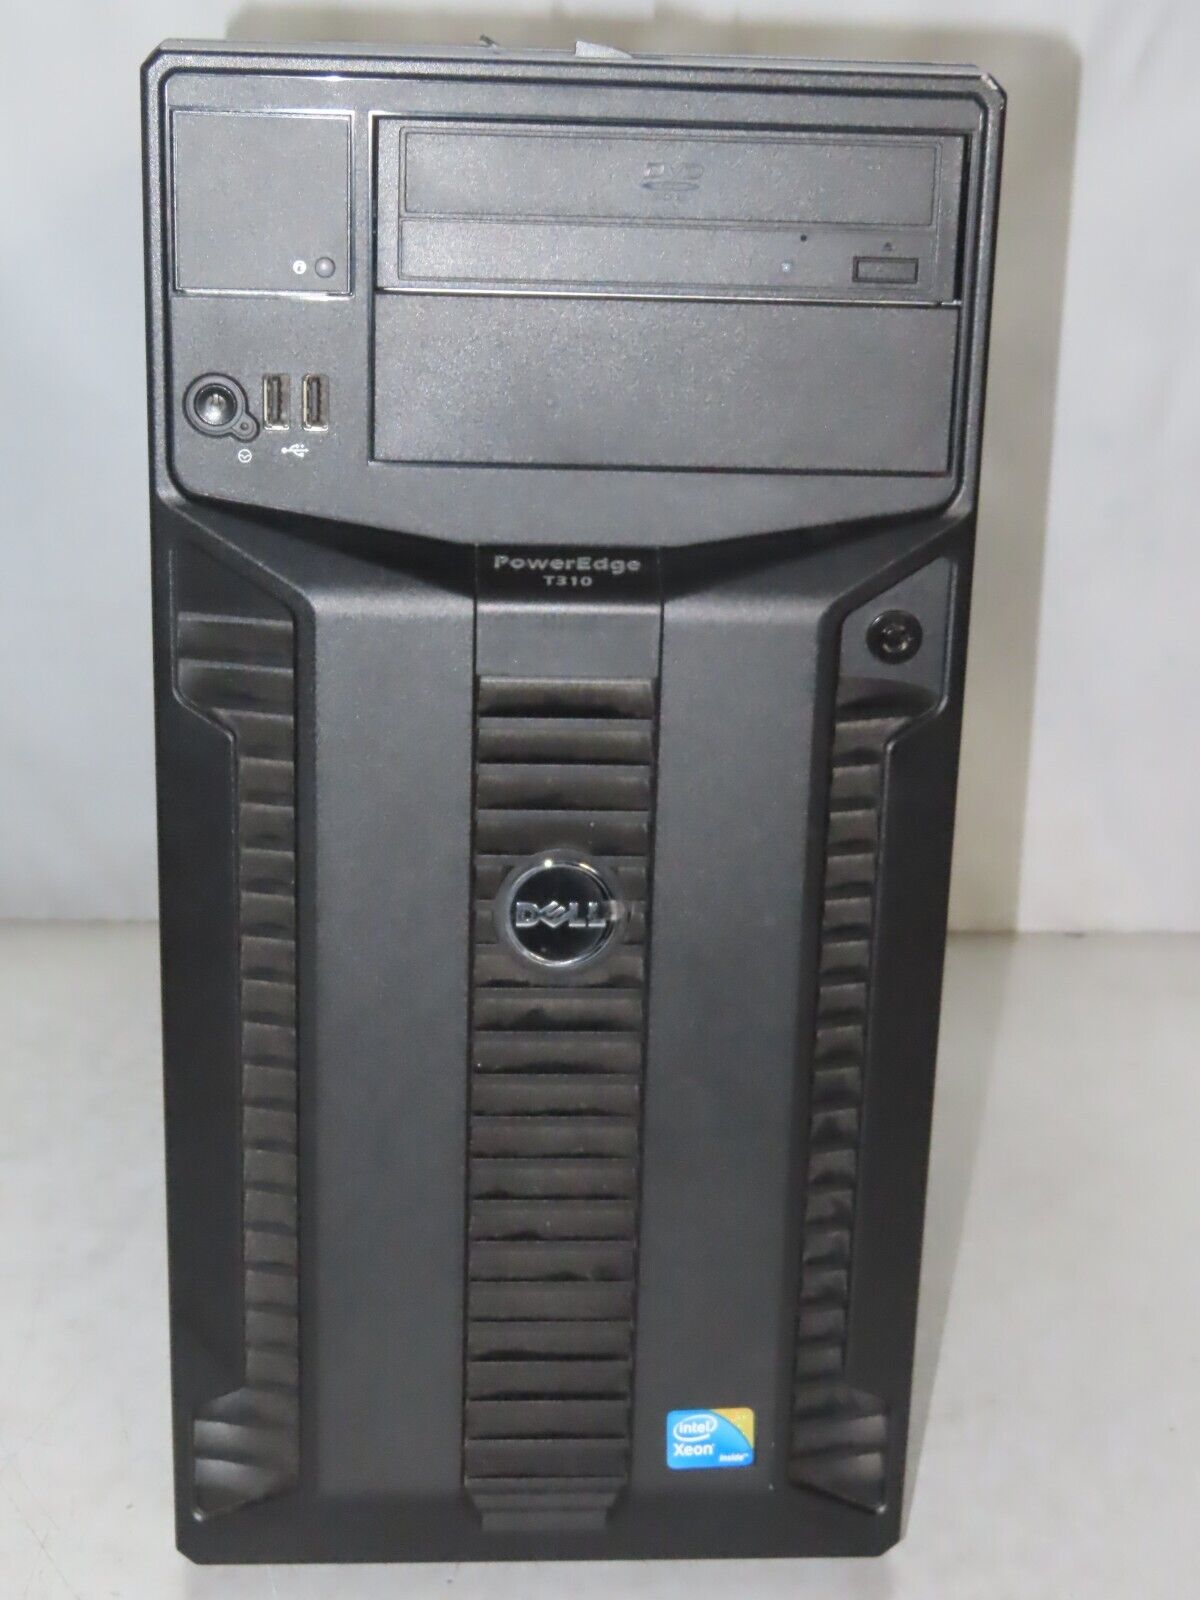 Dell Poweredge T310, Xeon X3430 @2.4Ghz, 8GB RAM, NO HDD/OS